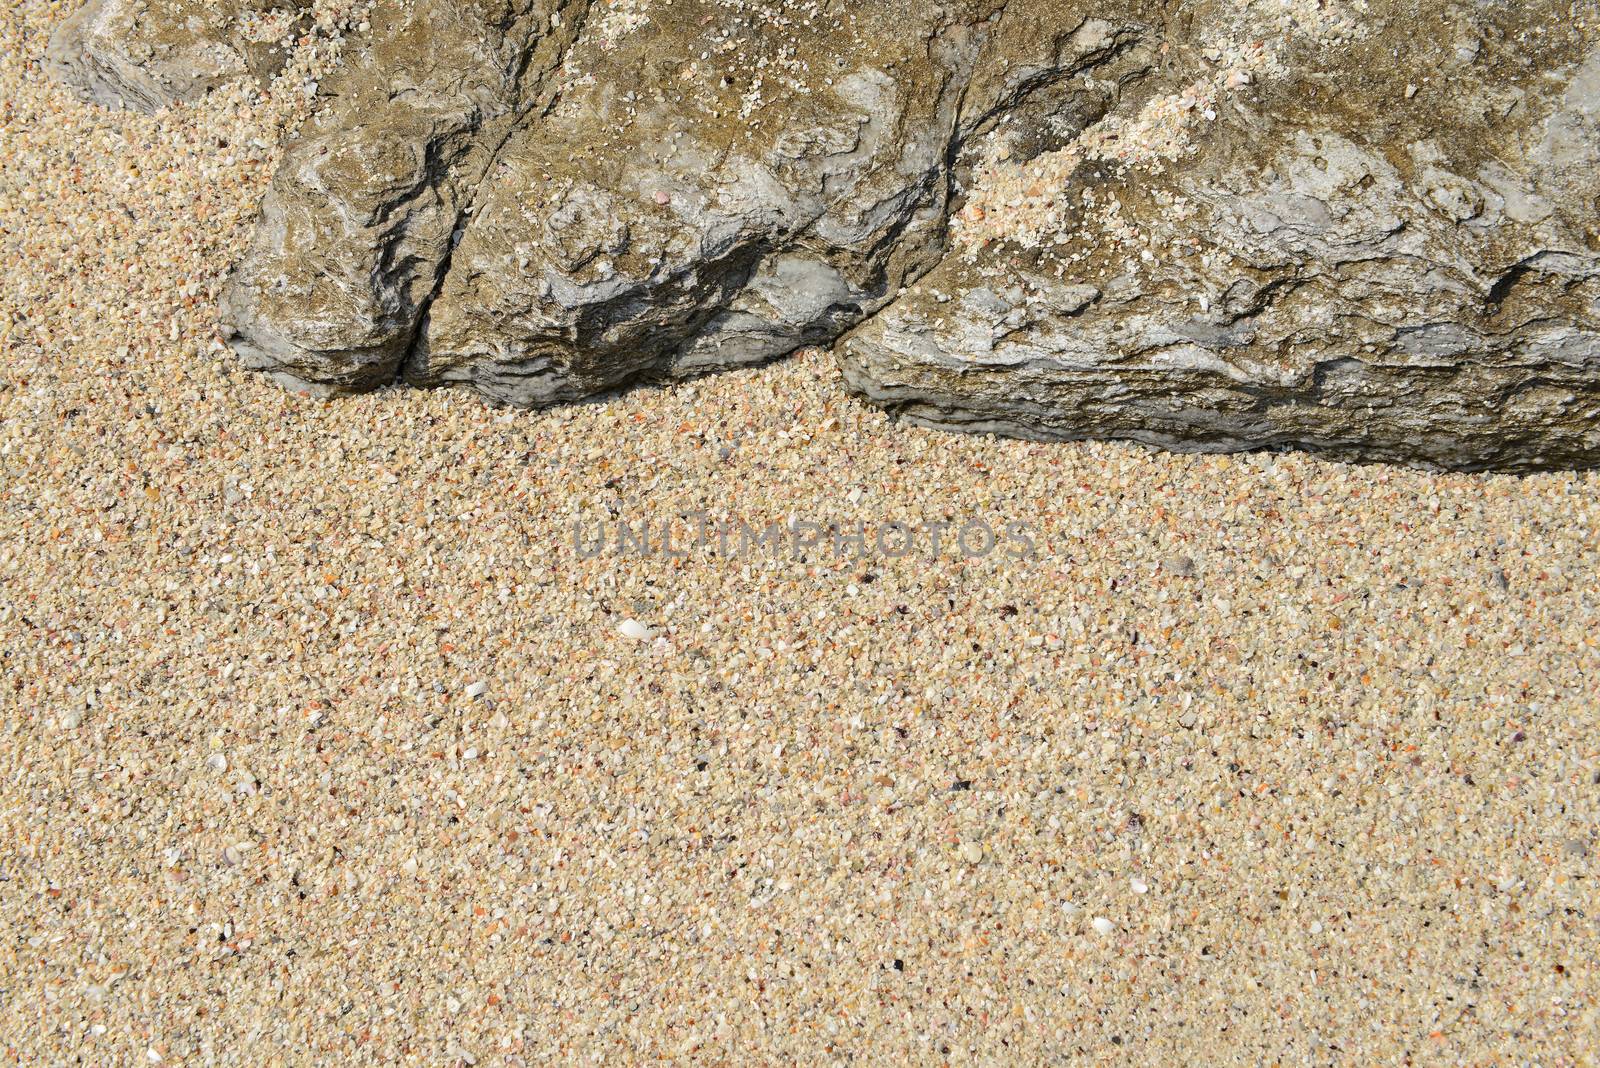 Sand beach rocks beautiful pattern and texture 